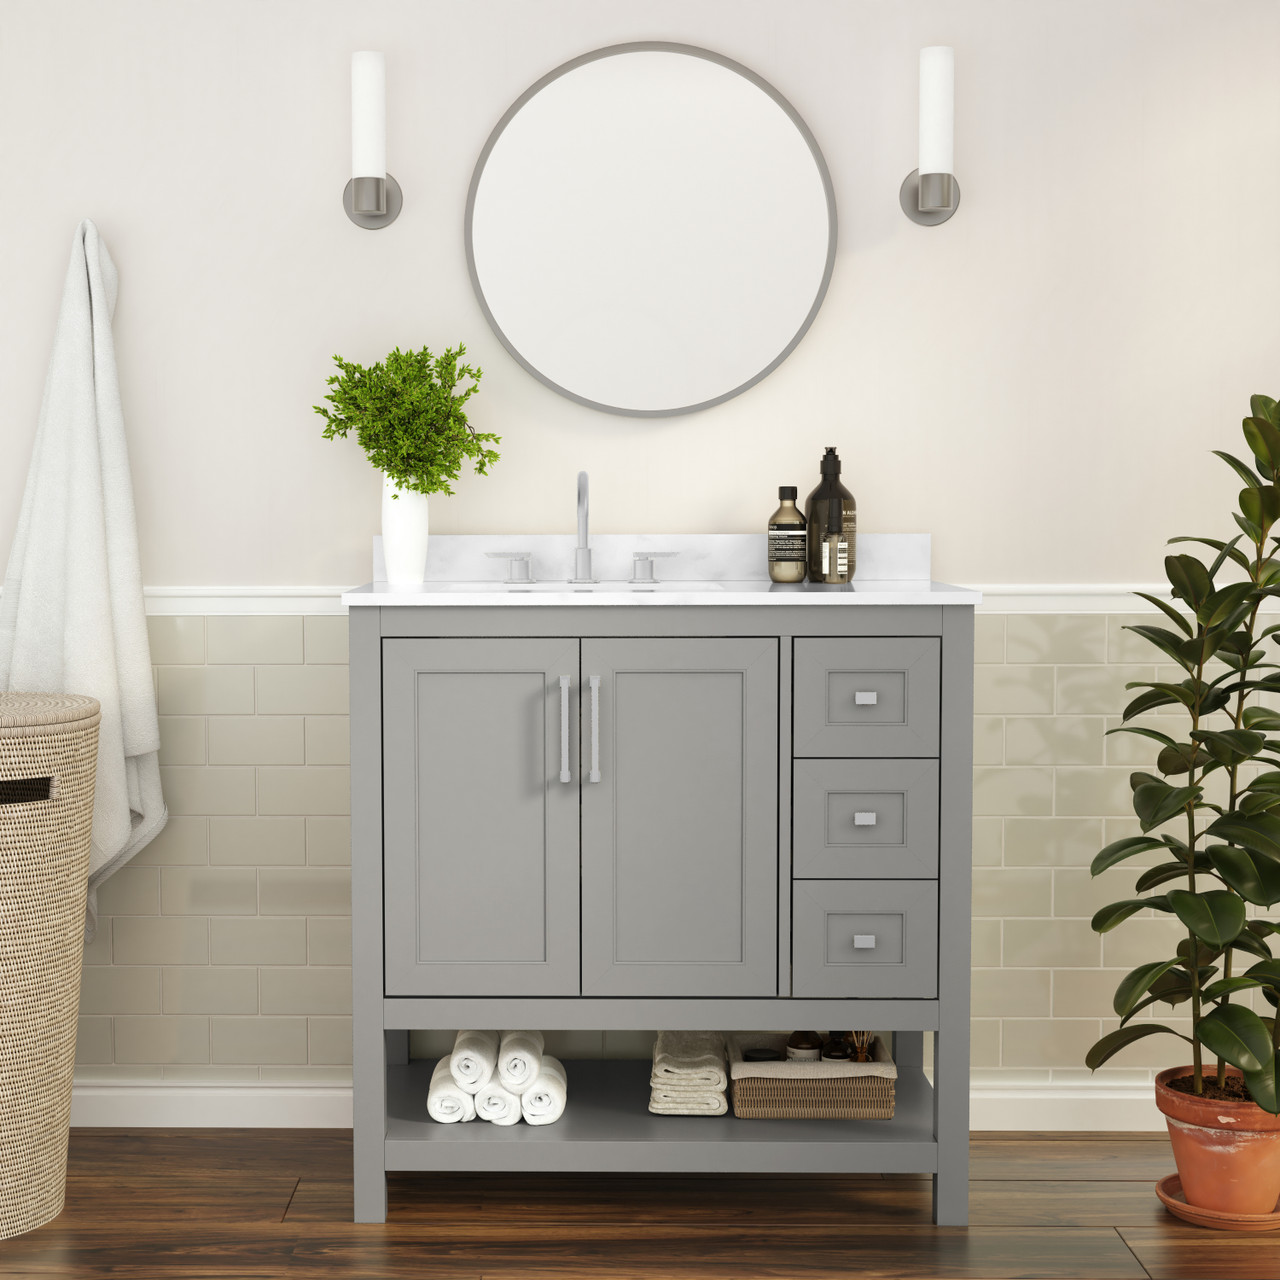 3 Drawers Kitchen Bathroom Gap Dresser 24.5x28.5x166CM PP+PET+ABS Storage Cabinet - Transparent Tan